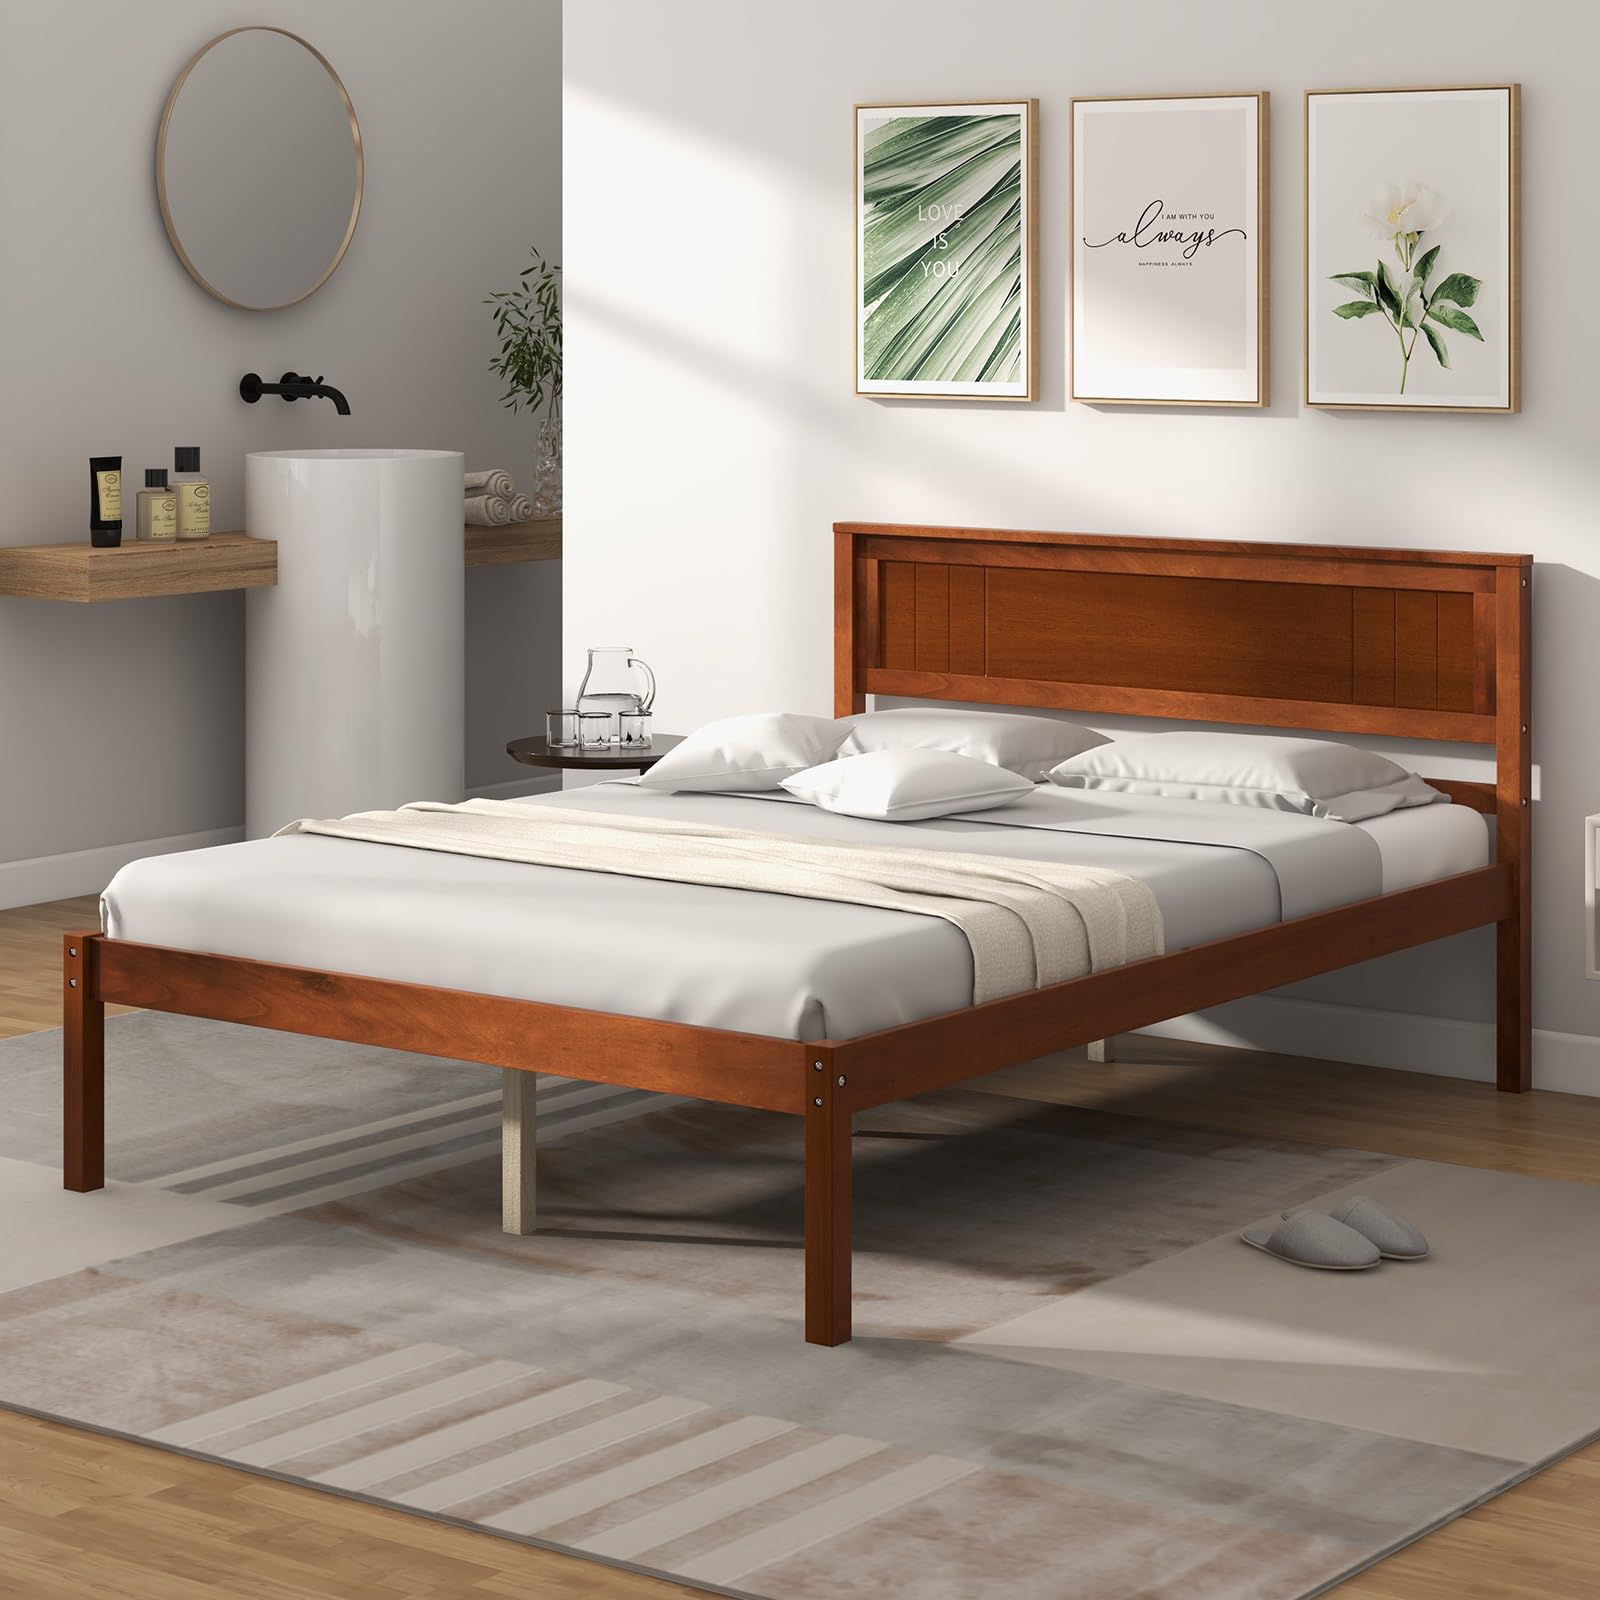 Giantex Wood Full Platform Bed with Headboard